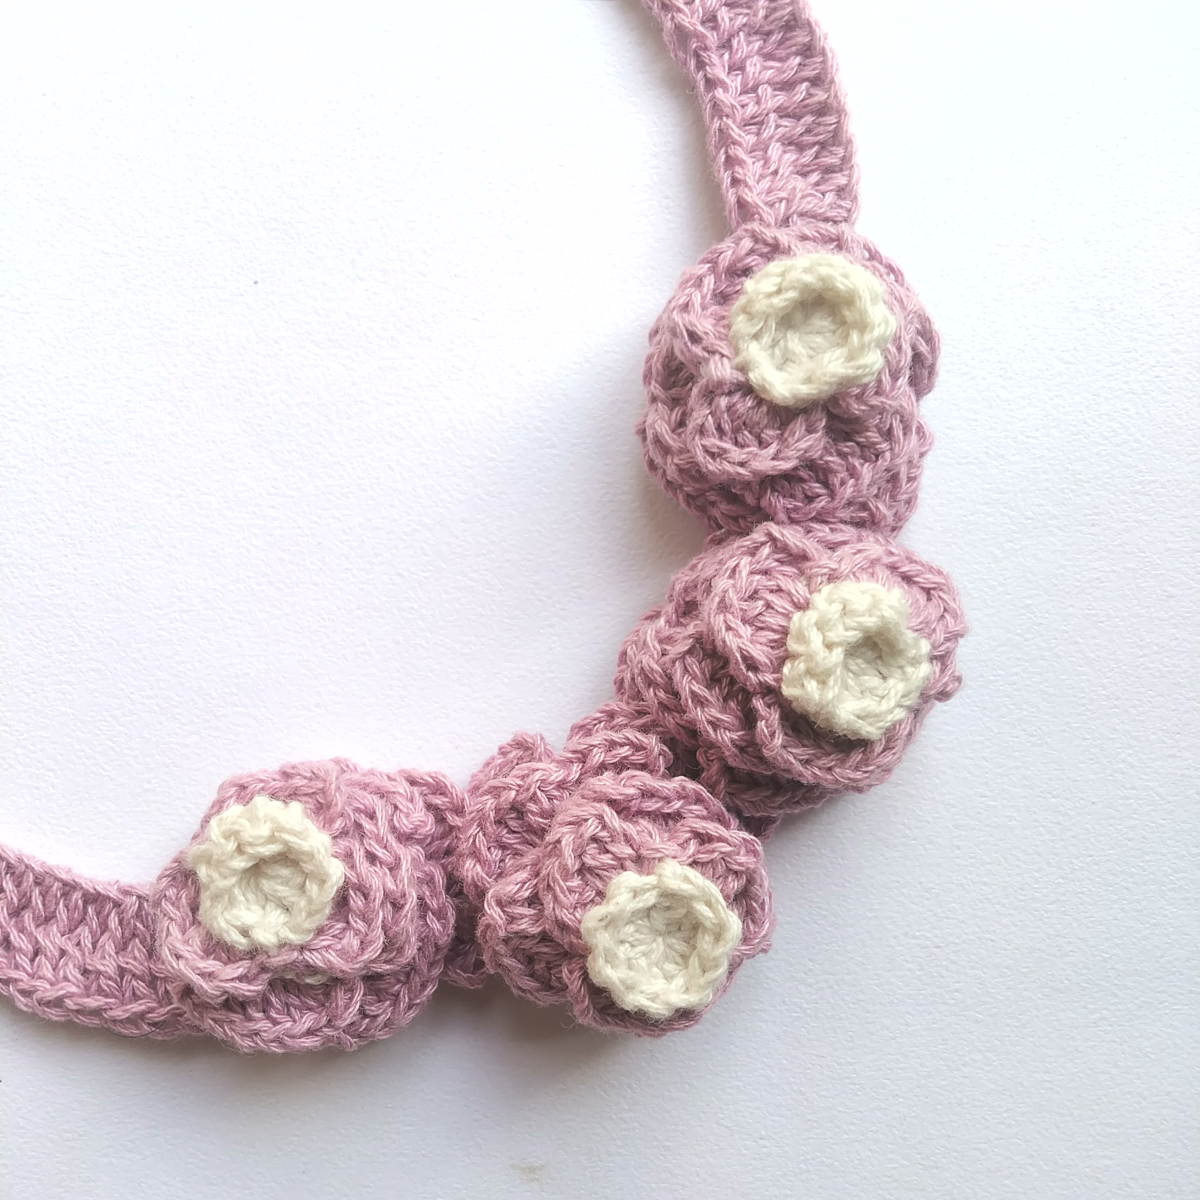 42+ Free Crochet Jewelry Patterns | AllFreeJewelryMaking.com